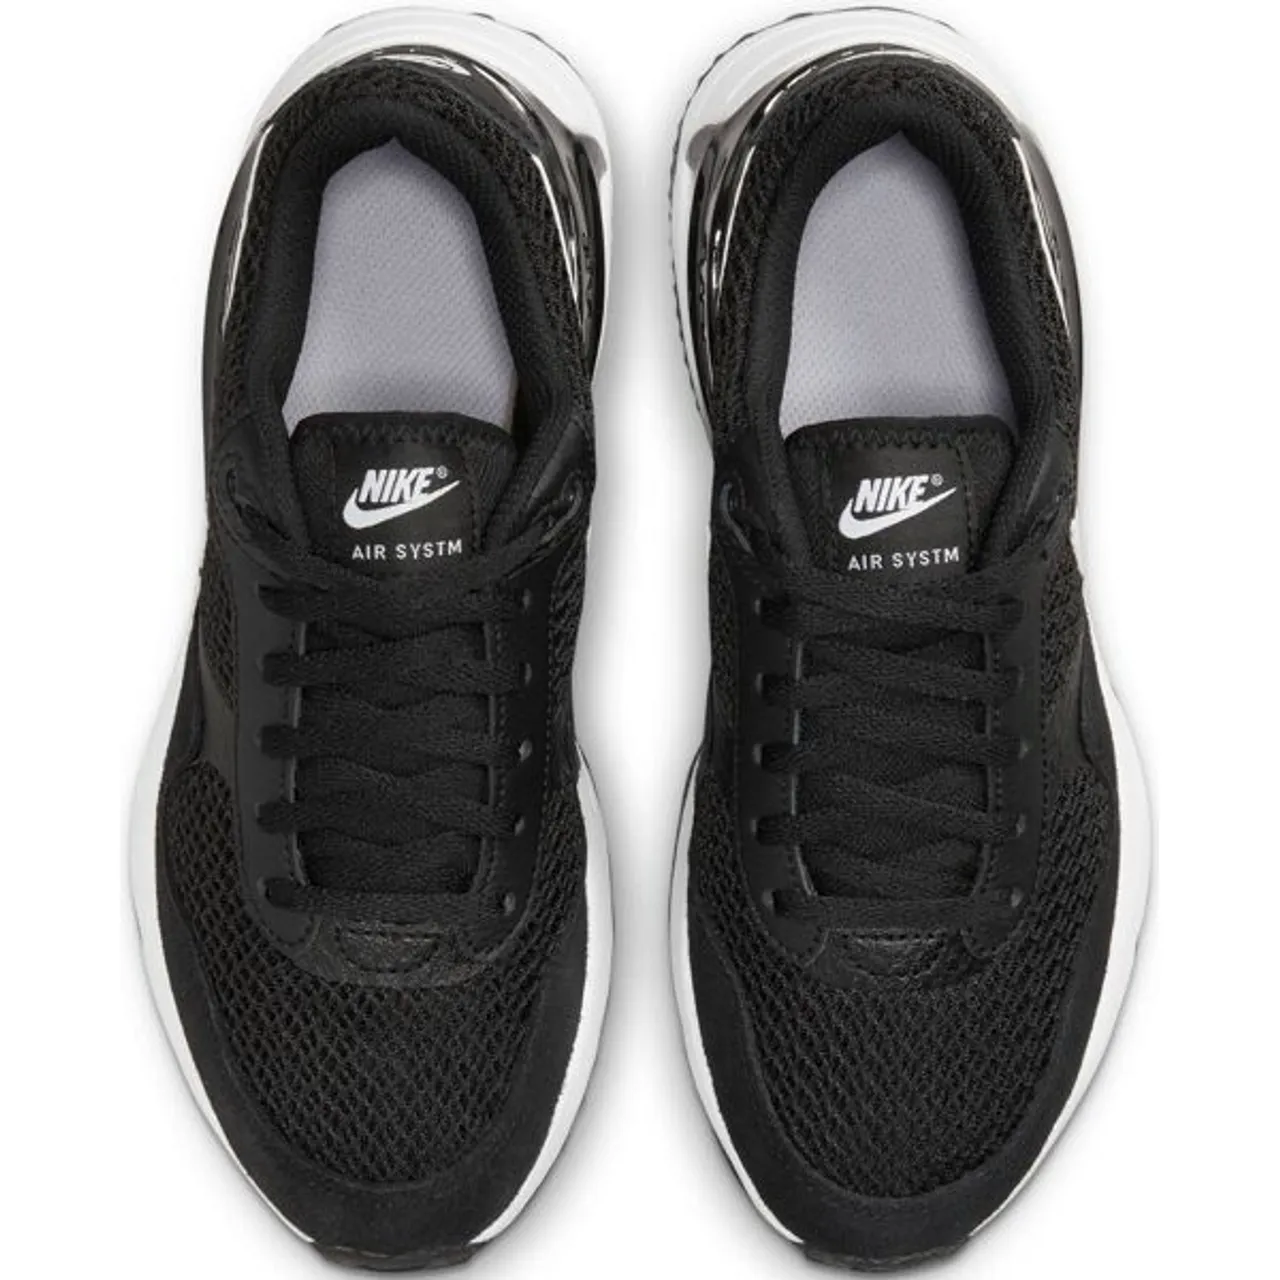 Sneaker NIKE SPORTSWEAR "AIR MAX SYSTM (GS)" Gr. 38, schwarz-weiß (black, white) Schuhe Laufschuhe